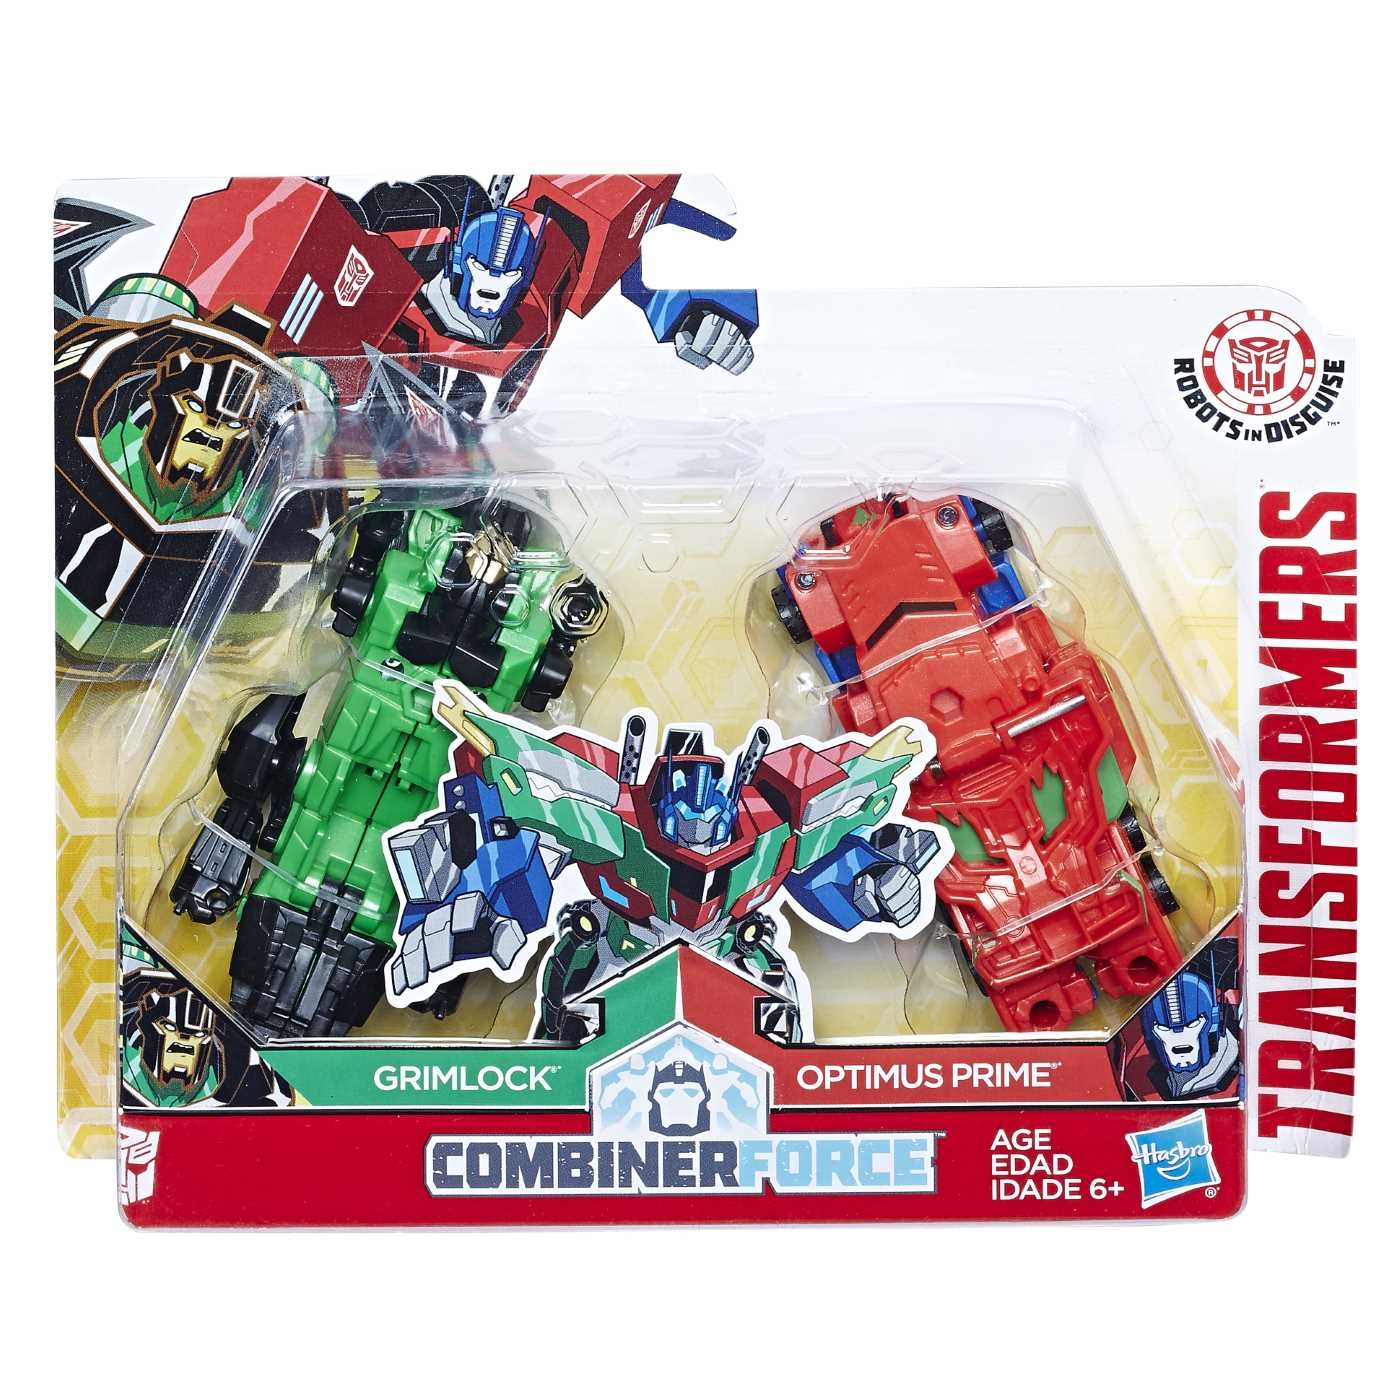 Transformers Robot CombiNERForce Optimus Prime & Grimlock HASBRO